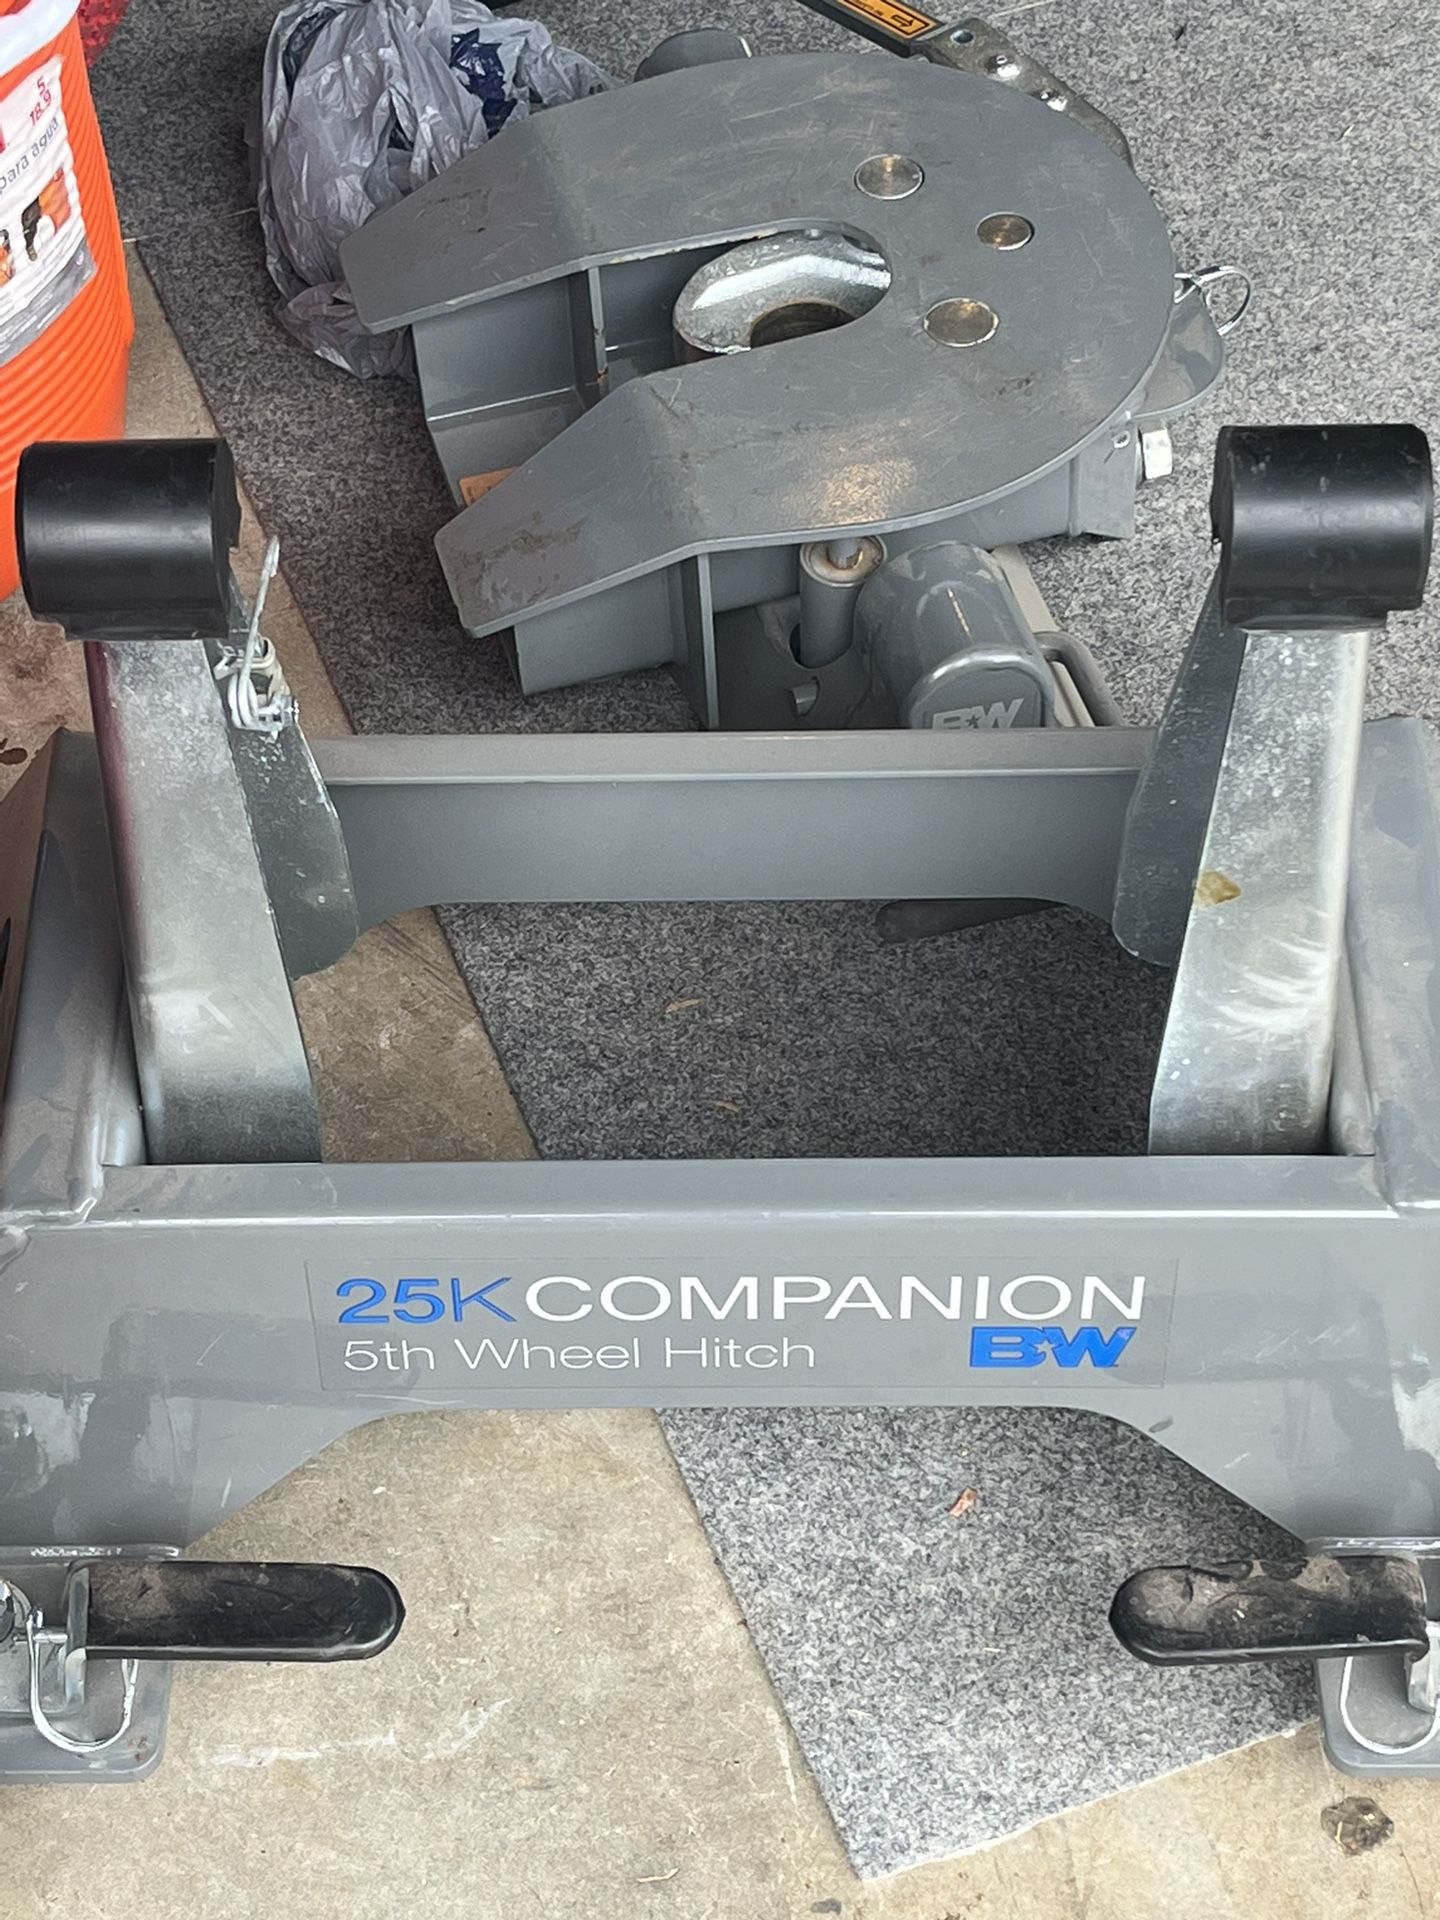 Companion 5th Wheel